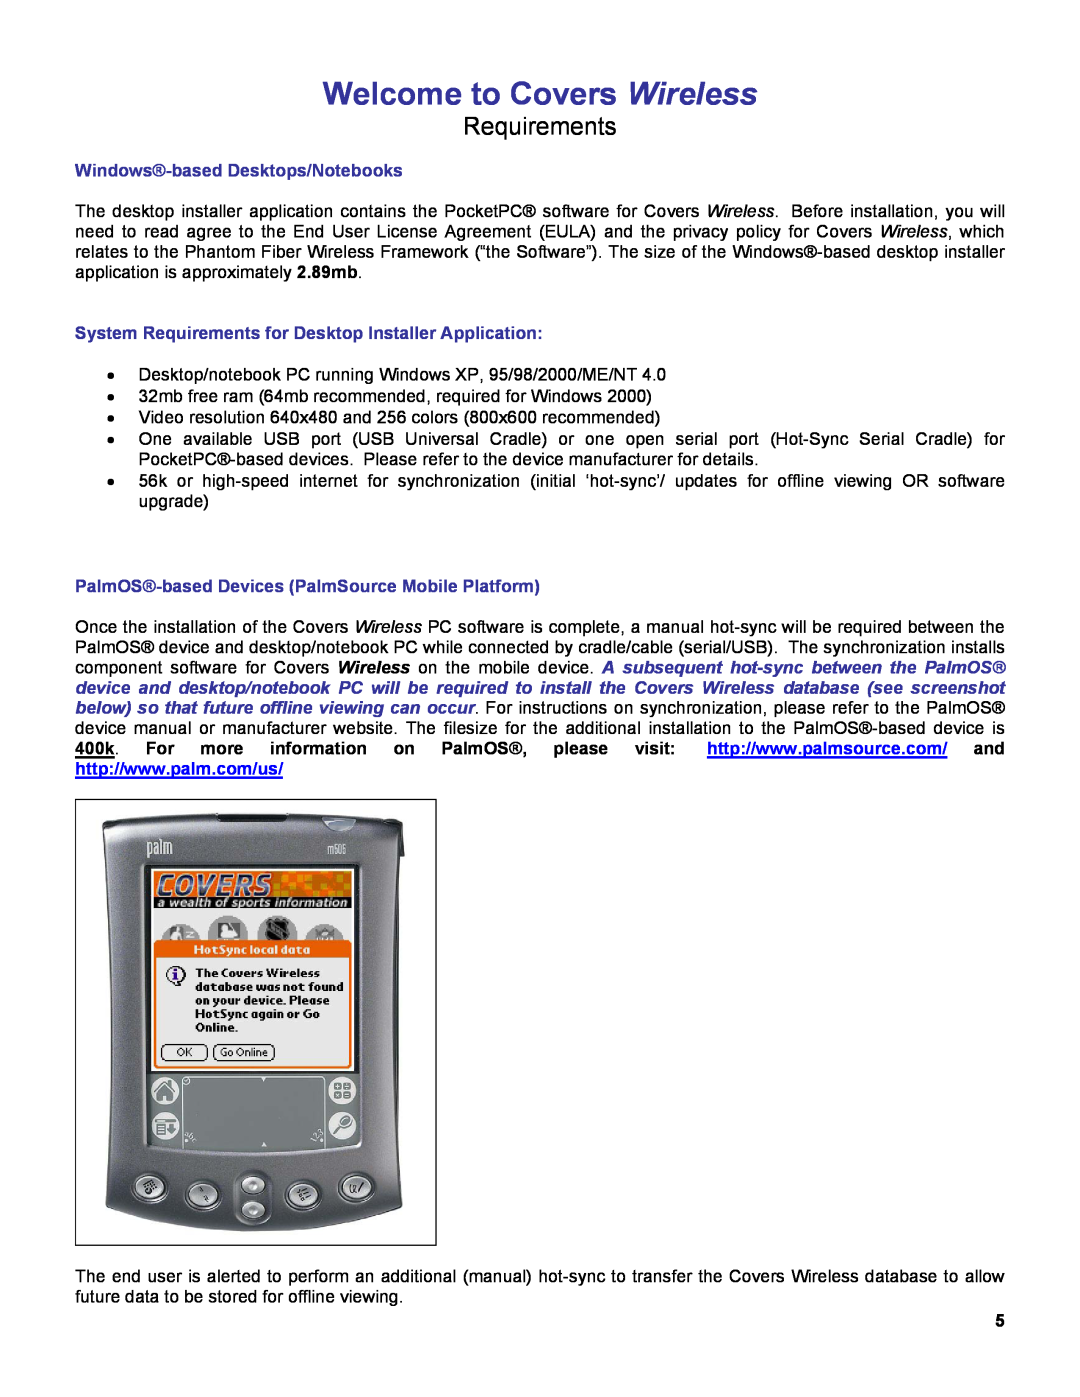 Palm OS Devices manual Windows-based Desktops/Notebooks, System Requirements for Desktop Installer Application 